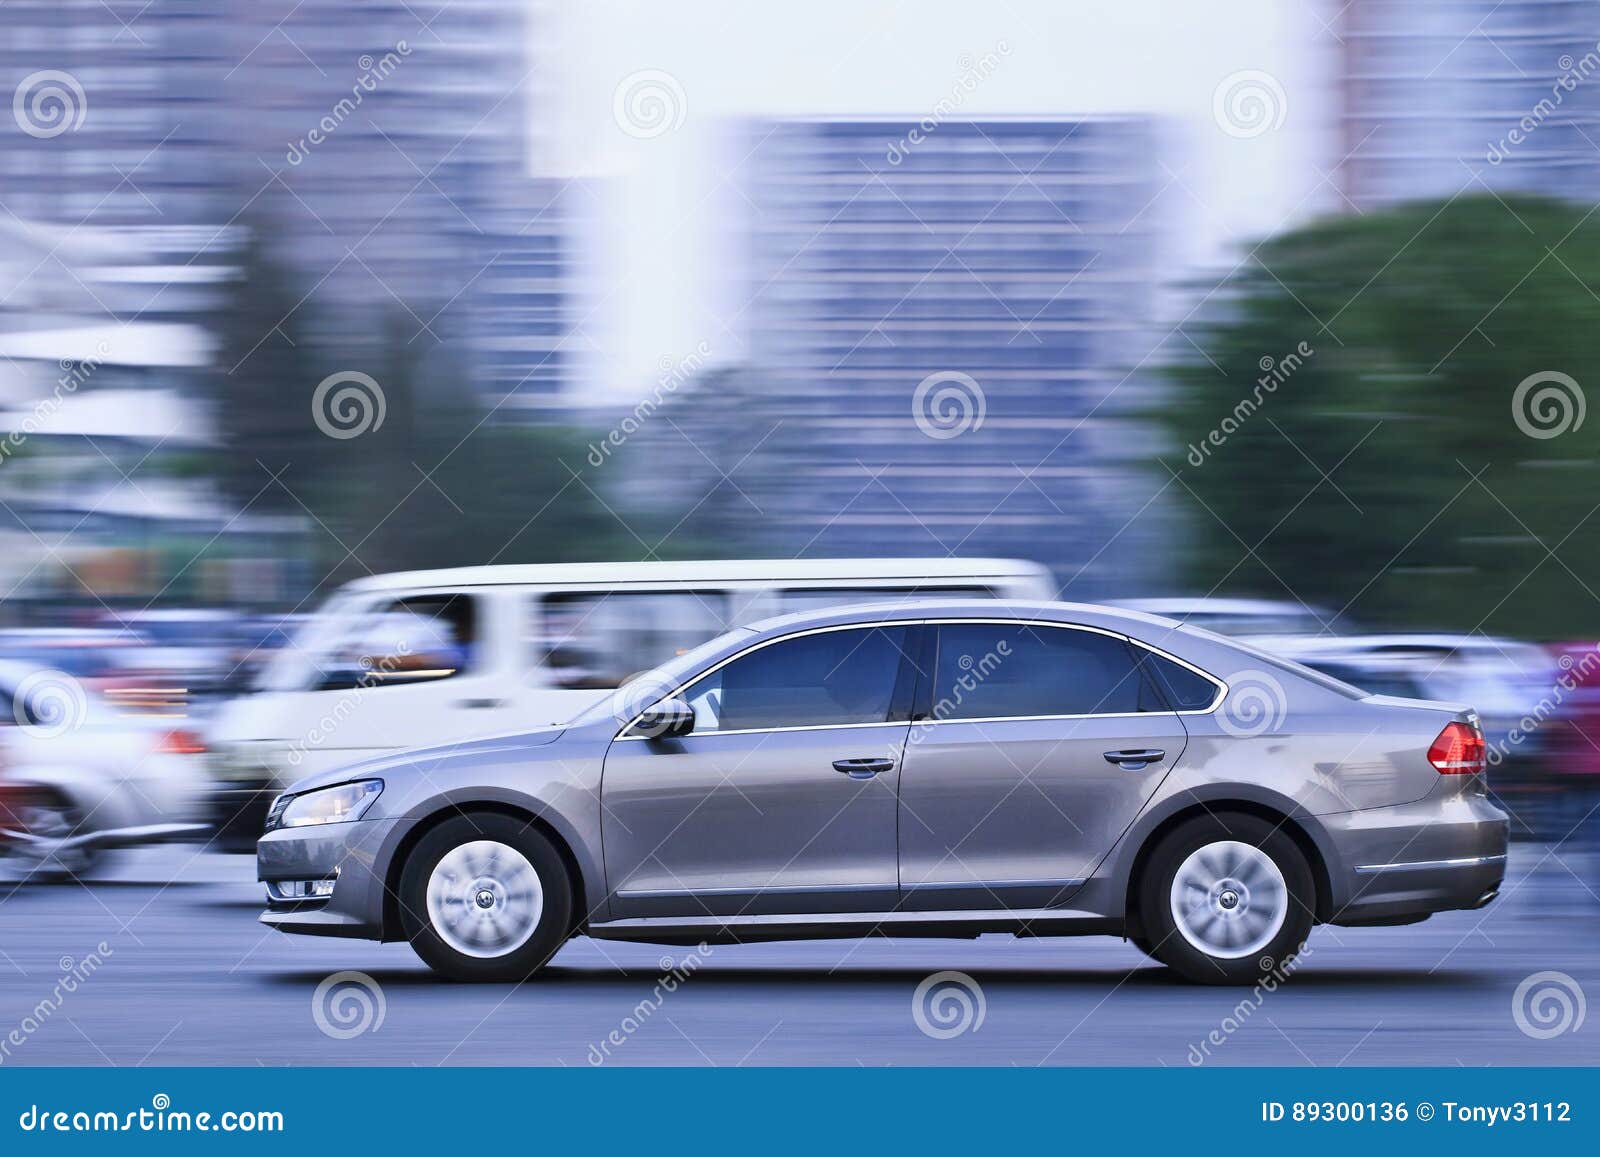 Volkswagen Passat B7 Downtown at Dusk, Beijing, Editorial Photo - Image of passat, lifestyle: 89300136